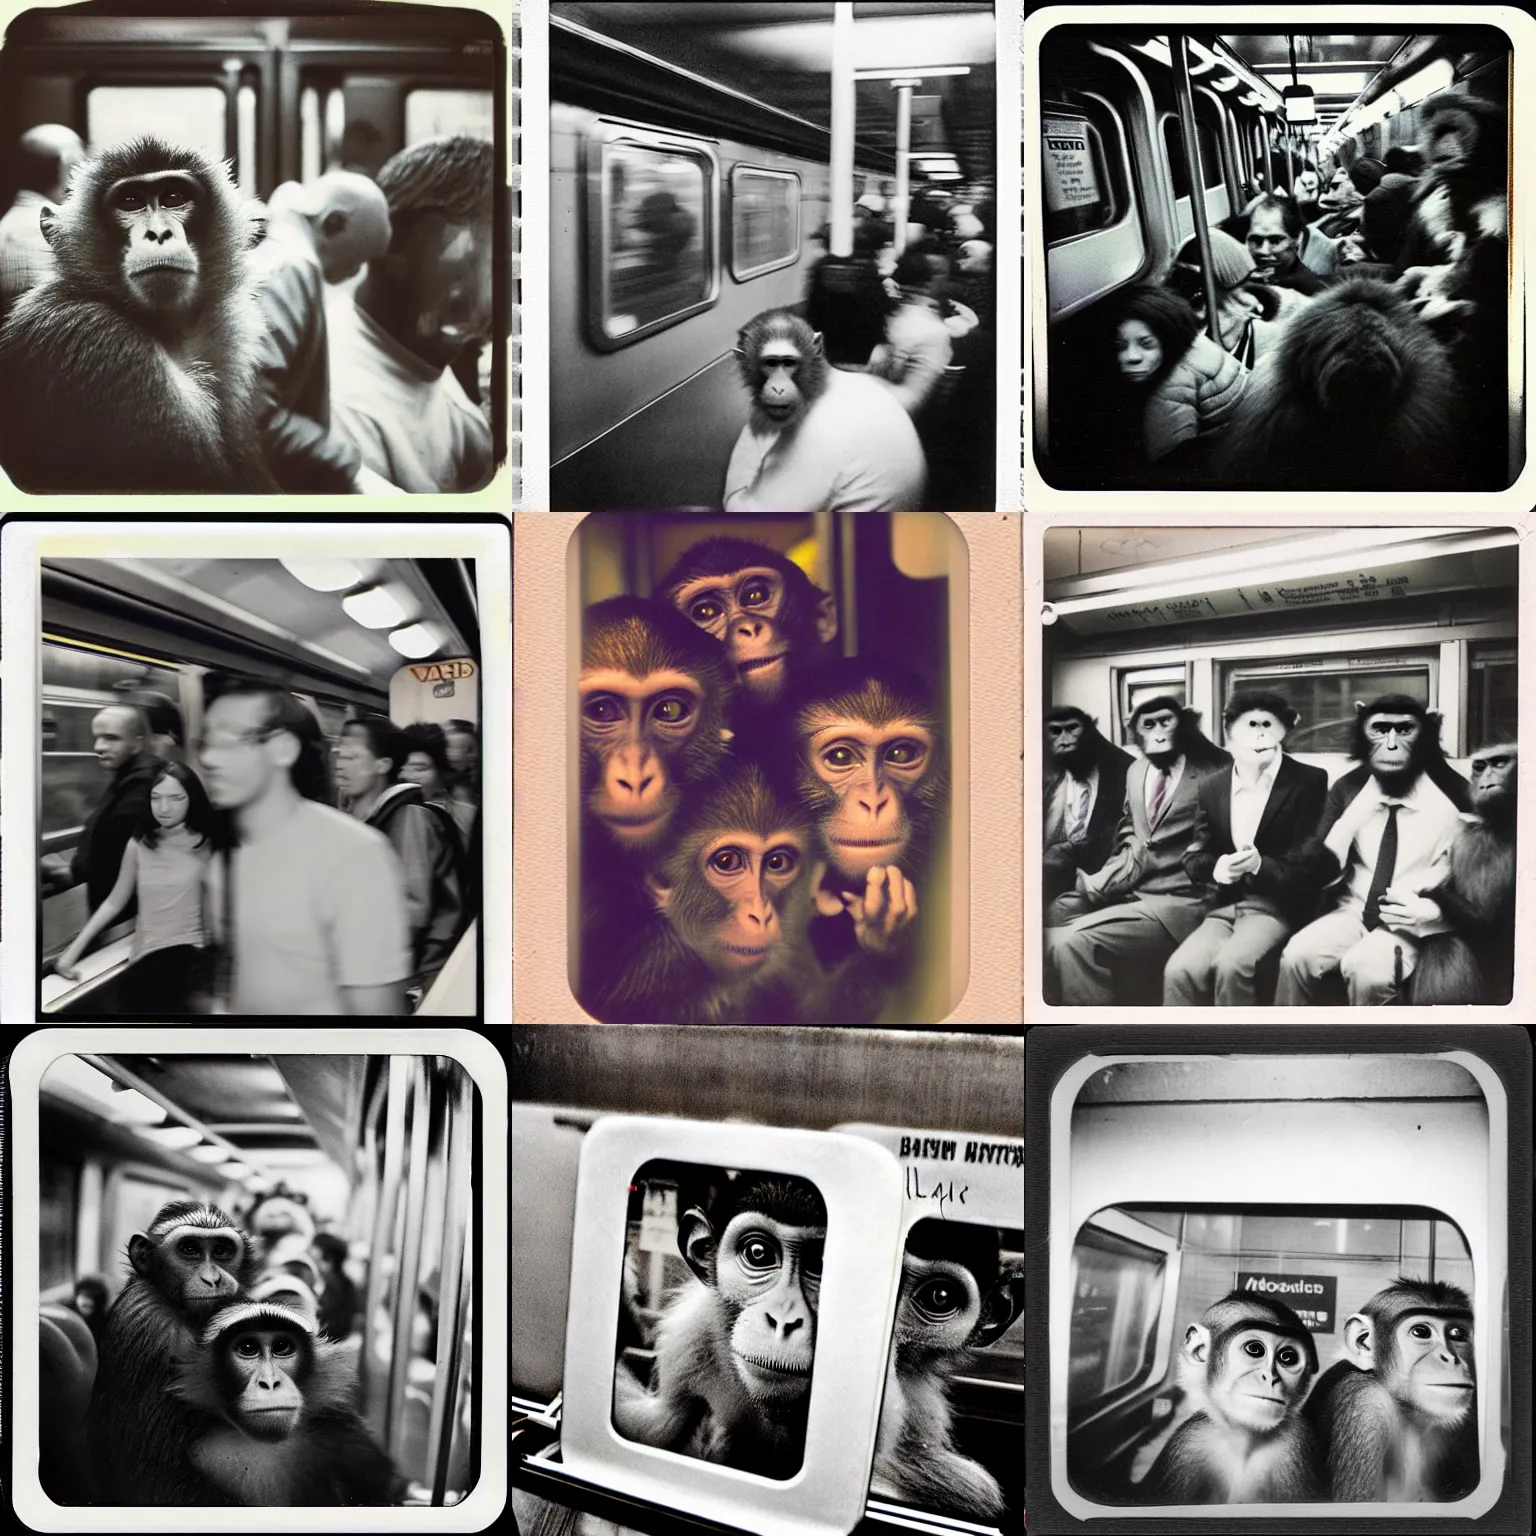 Prompt: monkeys on the subway new york, polaroid